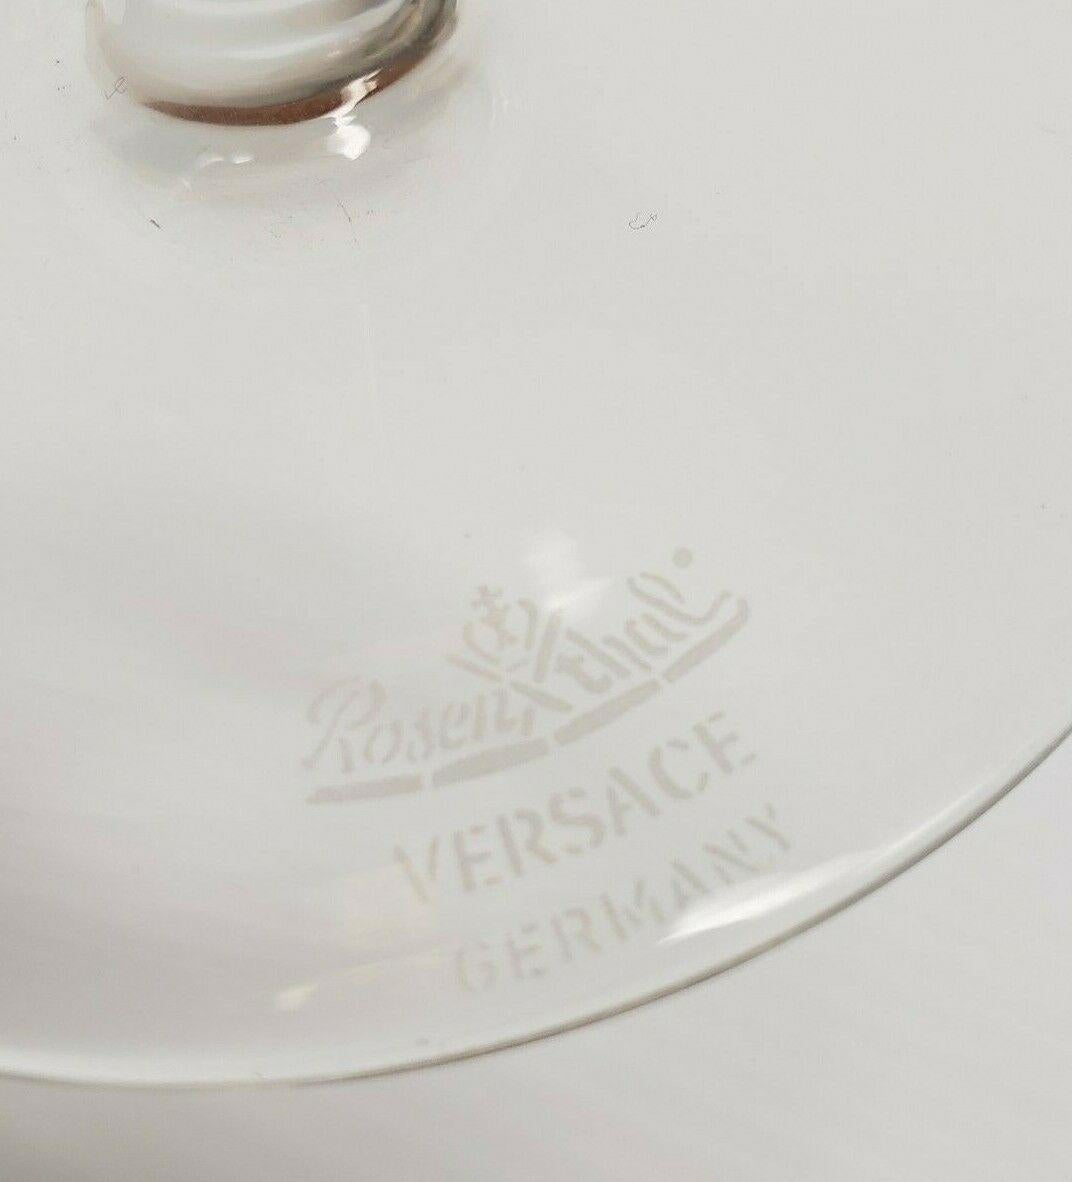 versace wine glass